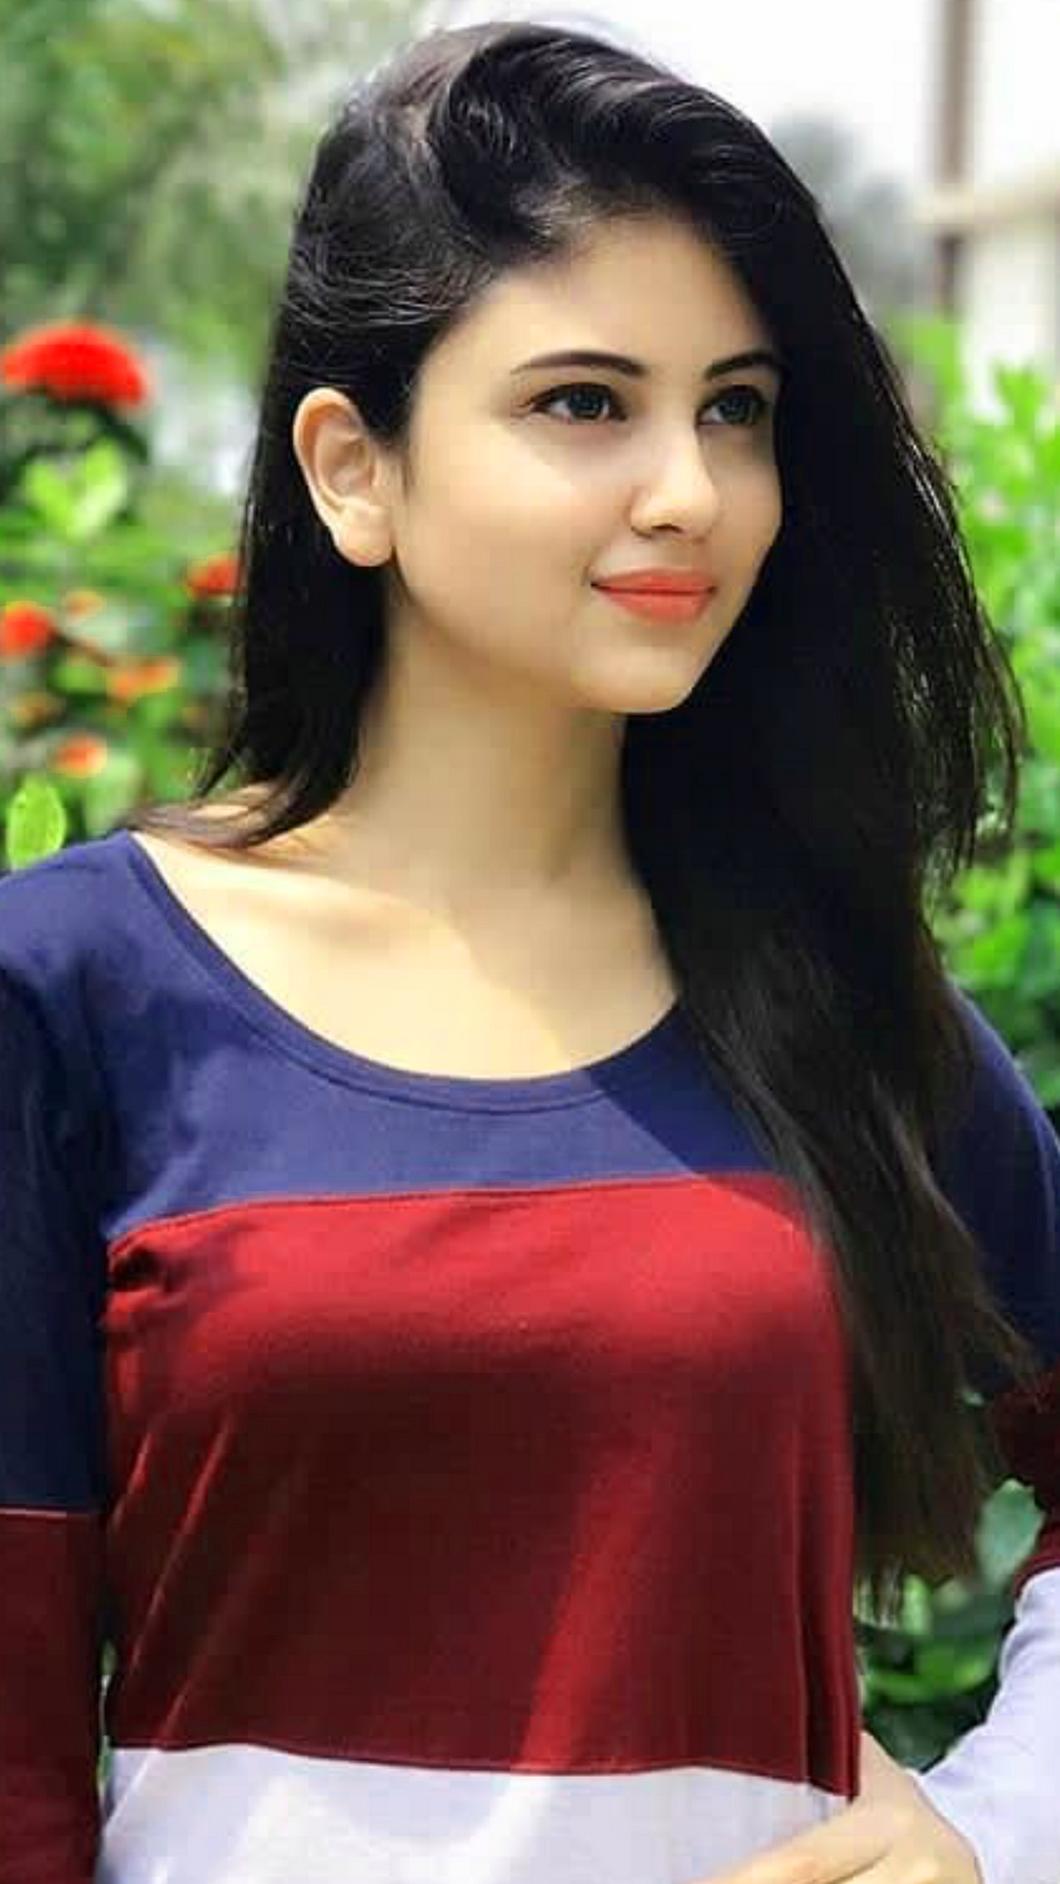 Indian Beautiful Girl Photo Wallpaper .walpaperlist.com